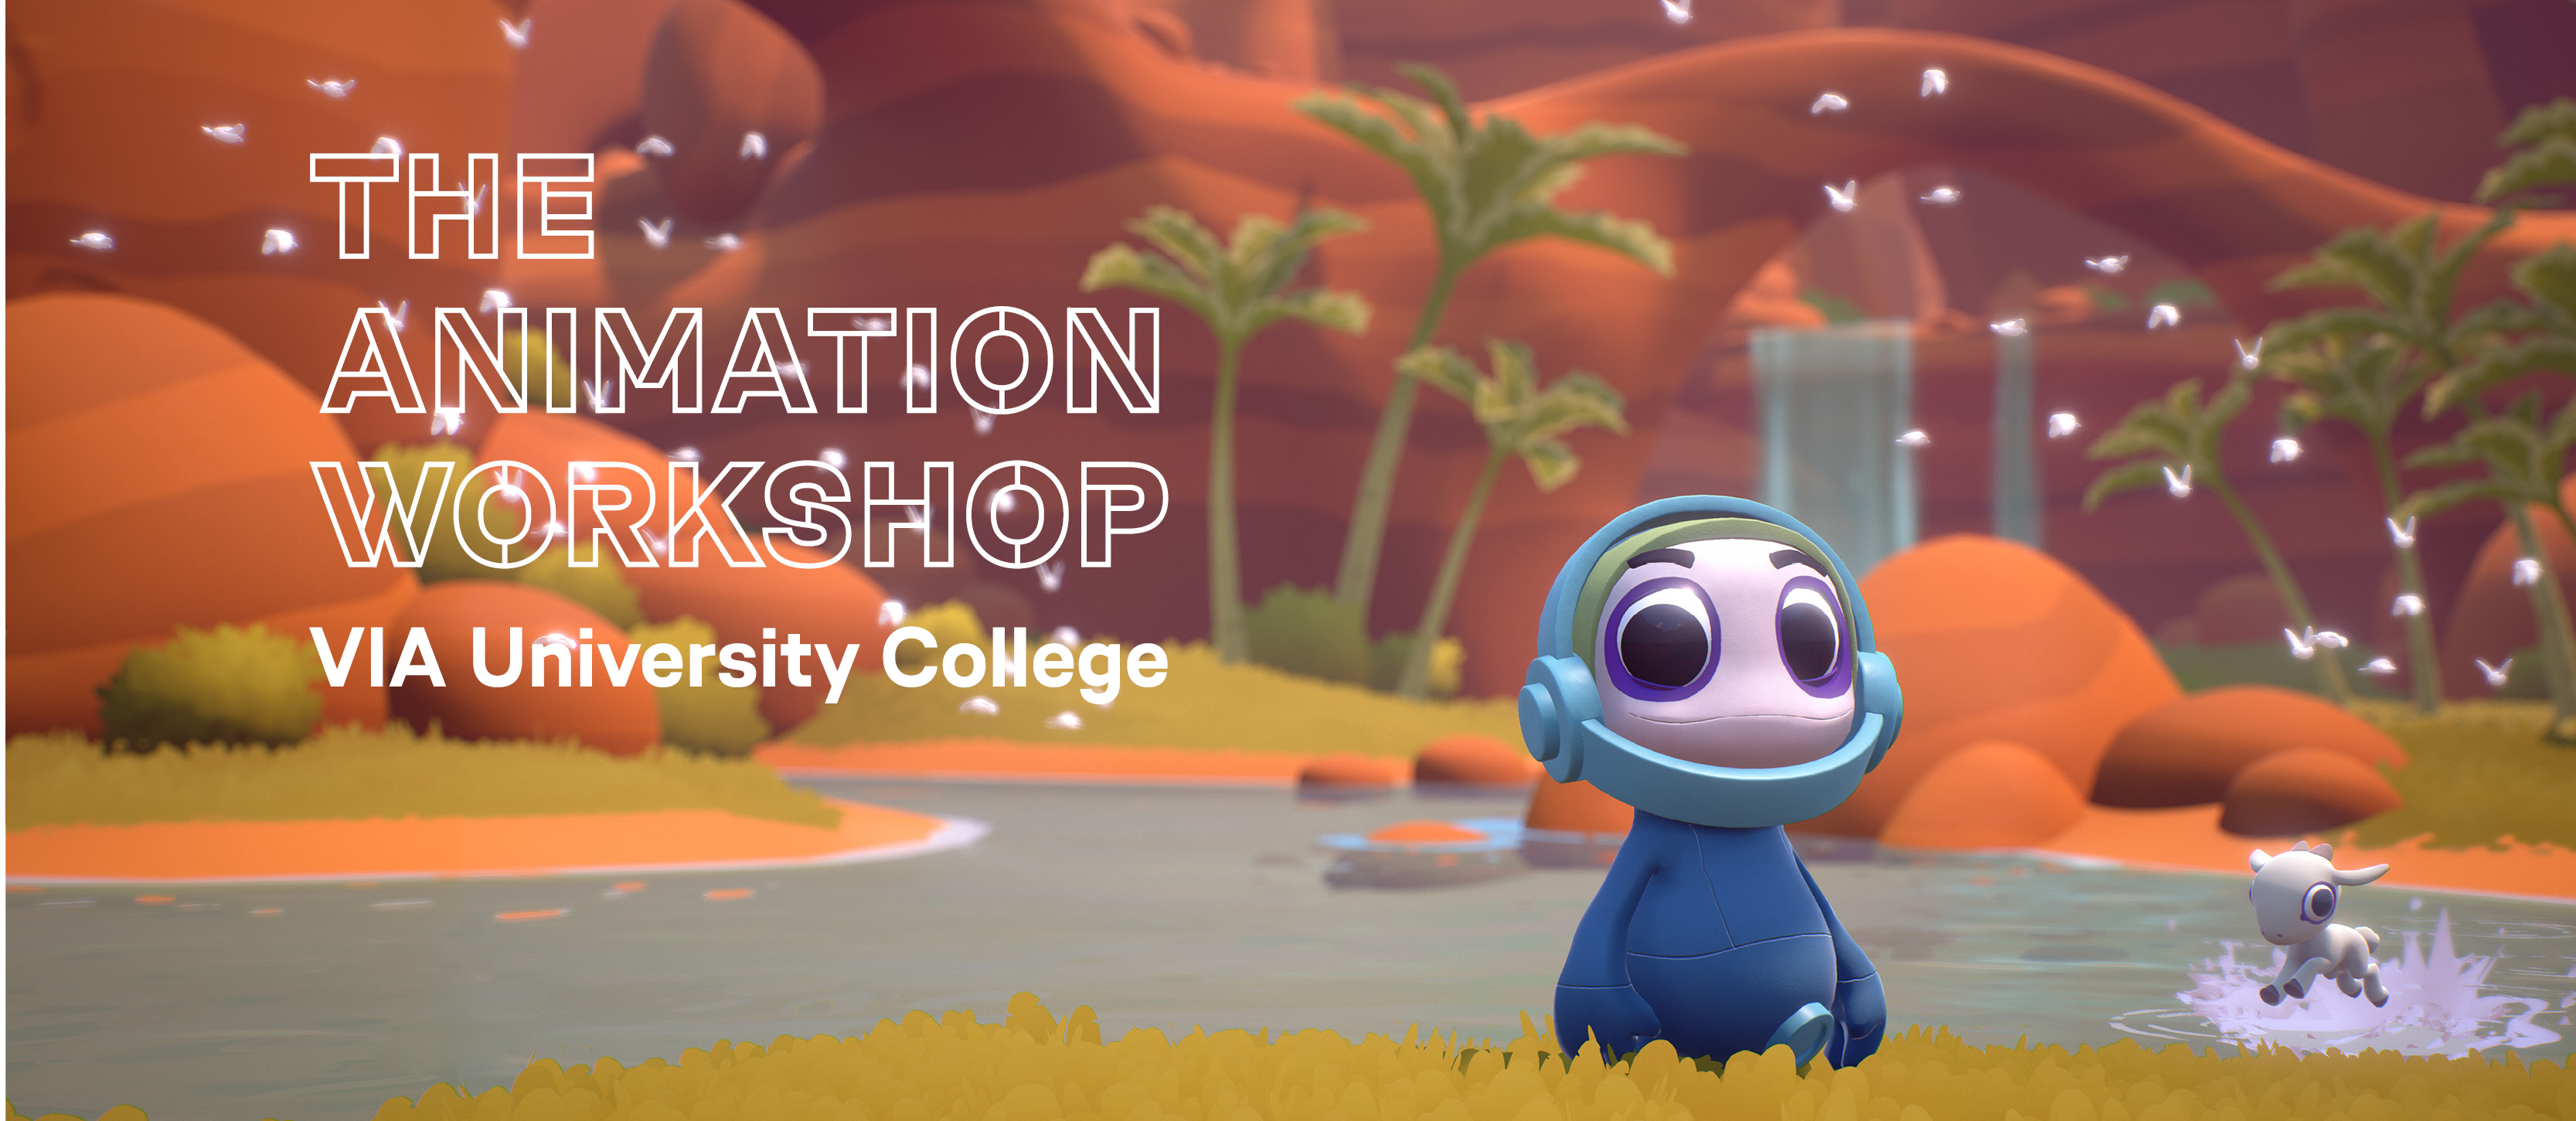 The Animation Workshop, VIA University College